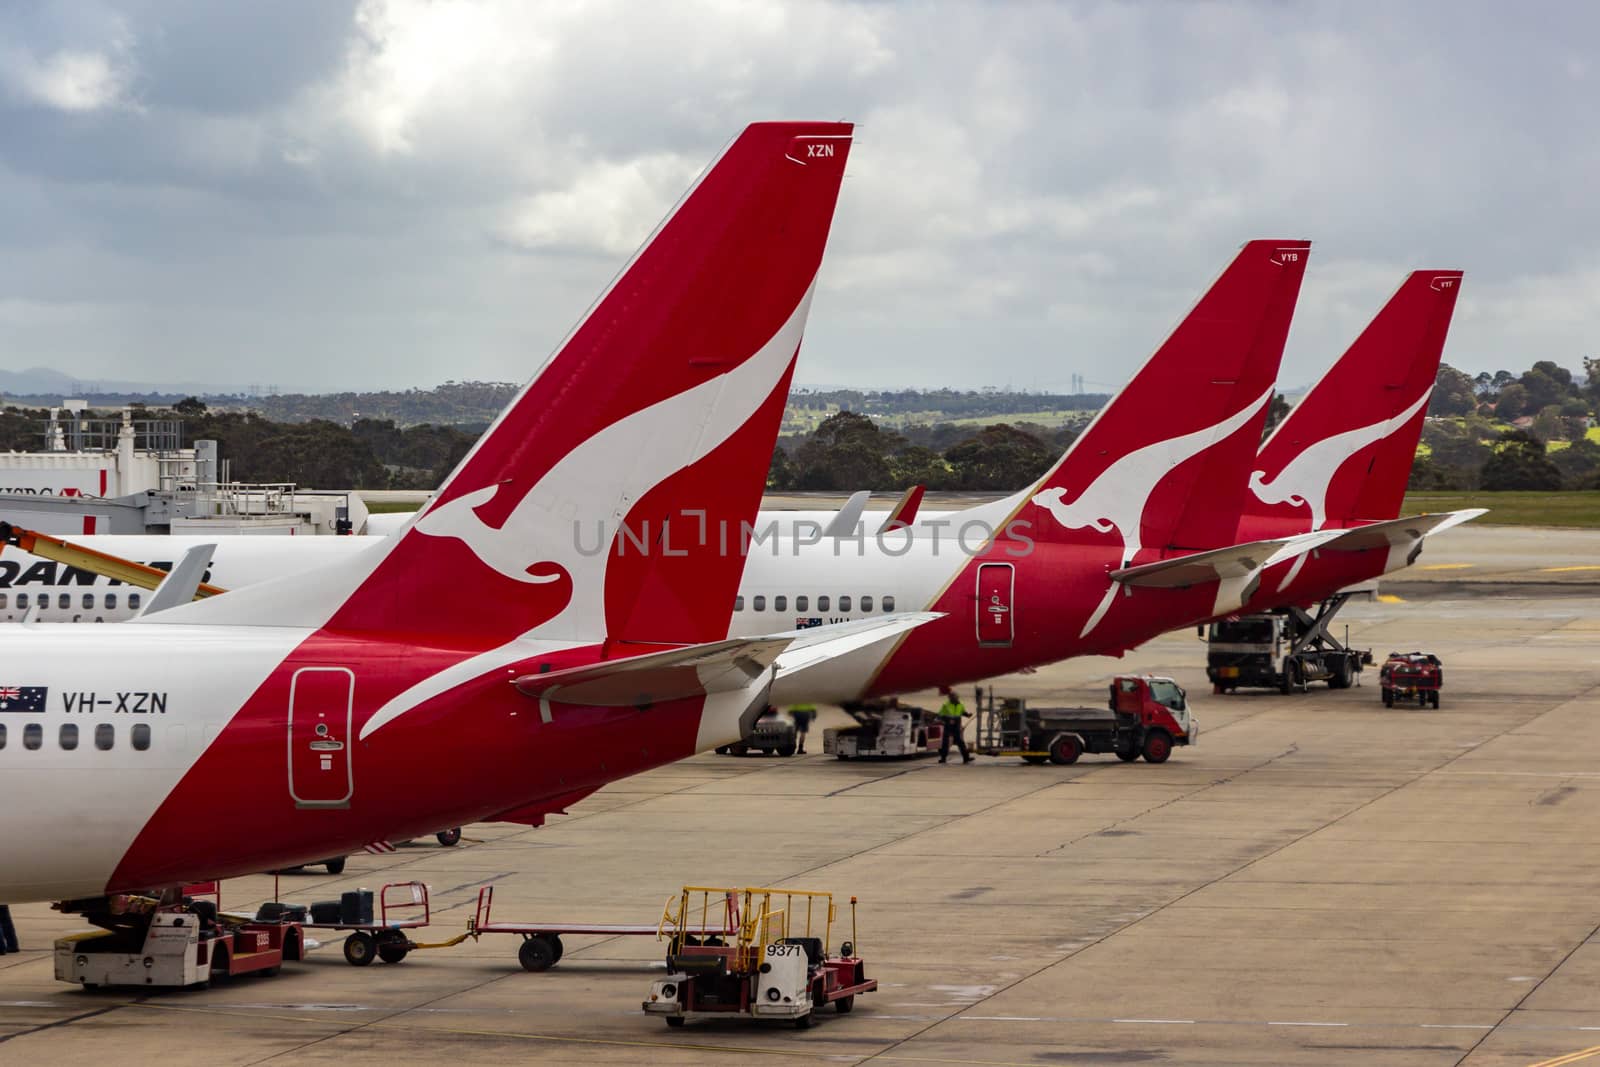 MELBOURNE/AUSTRALIA - SEPTEMBER 22, 2015: Heavy Jetliners parked at passenger terminal taking on passengers